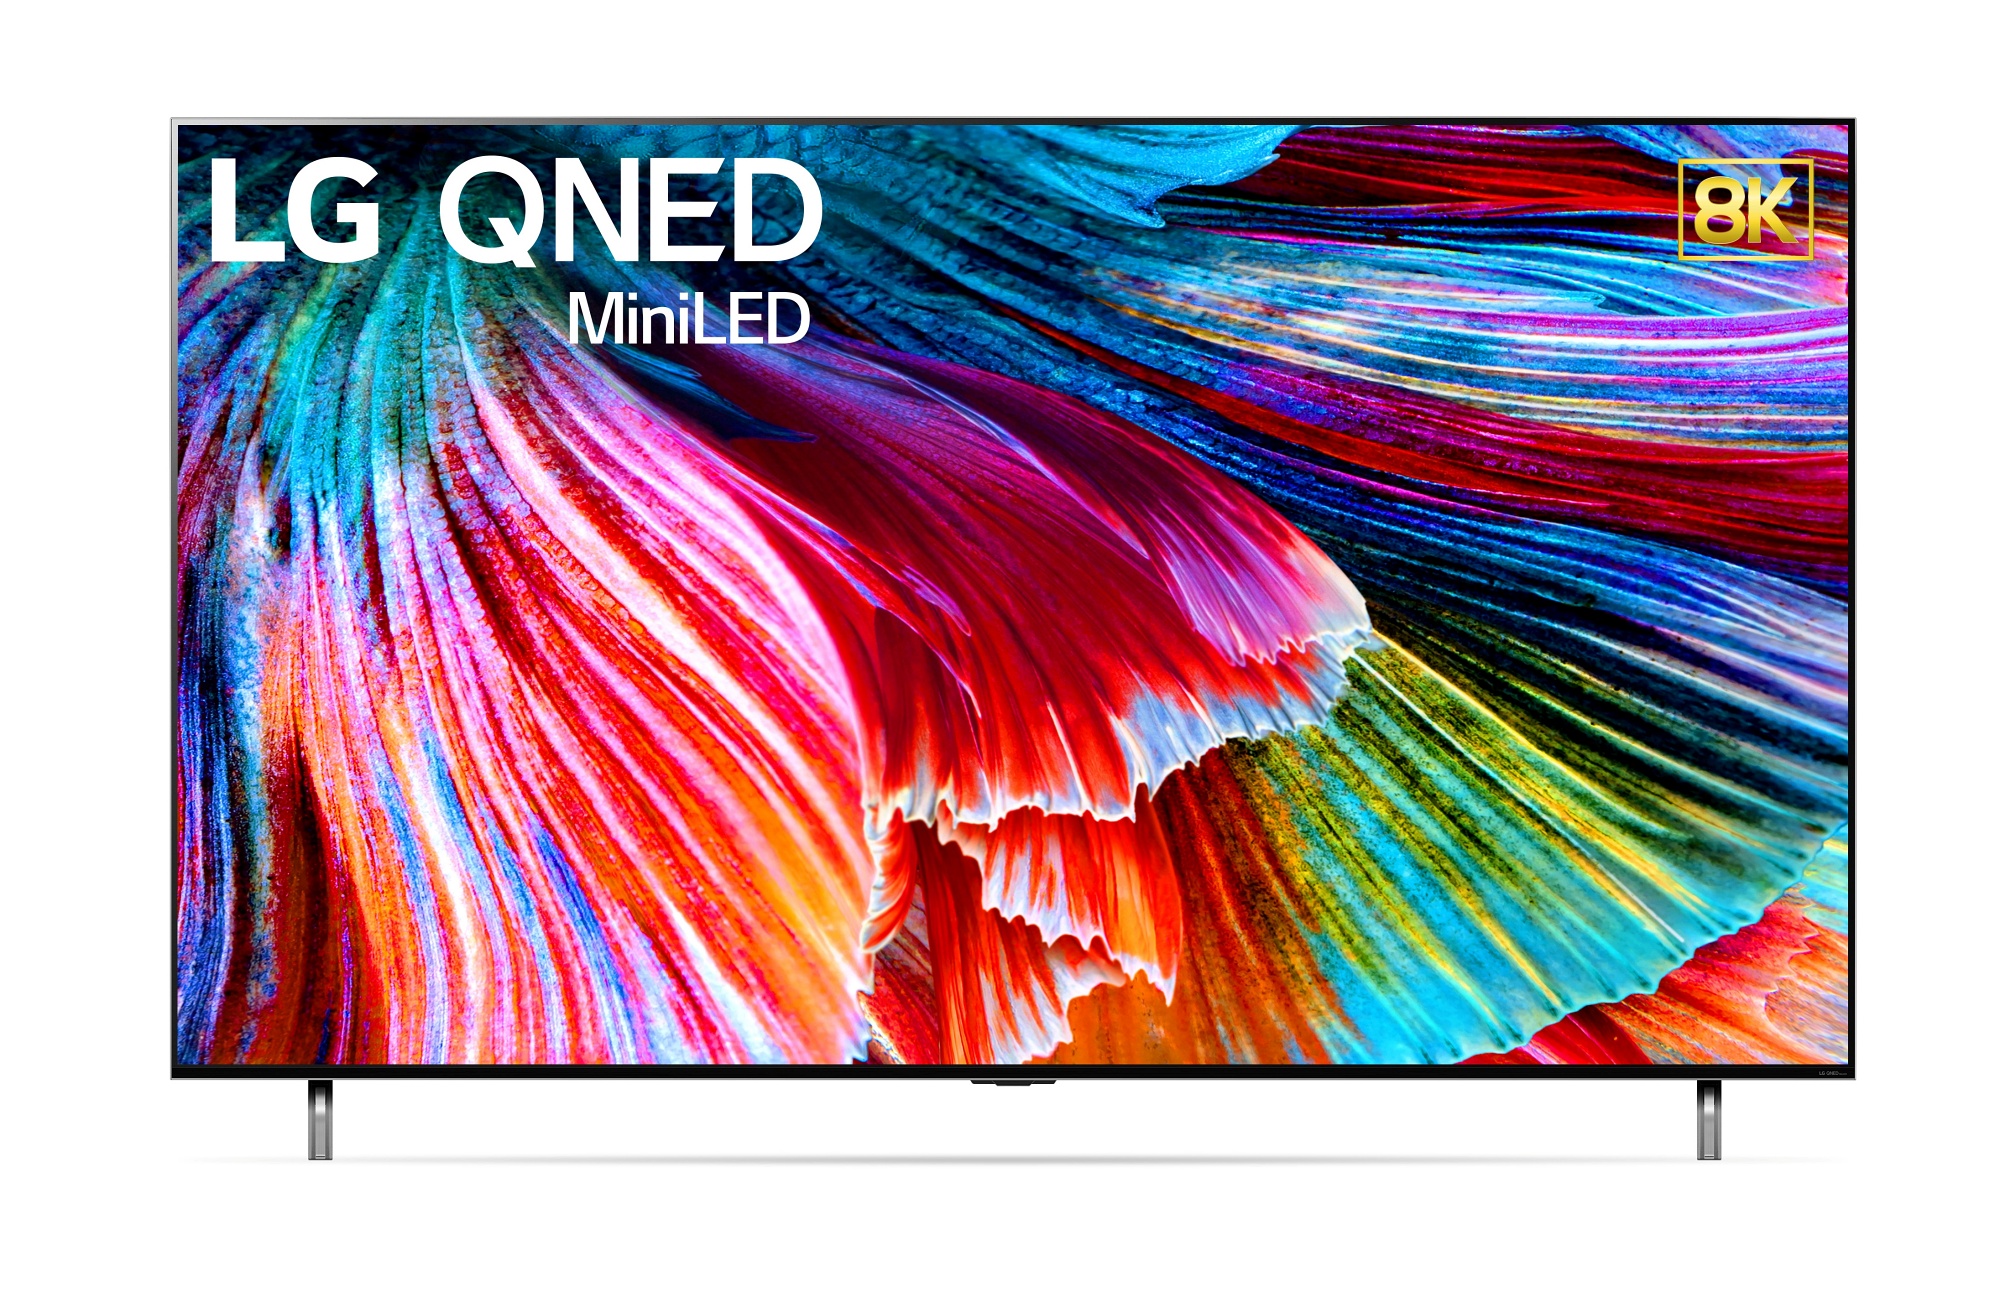 , LG QNED966: Η εξέλιξη των LCD TV έρχεται με την τεχνολογία Mini LED